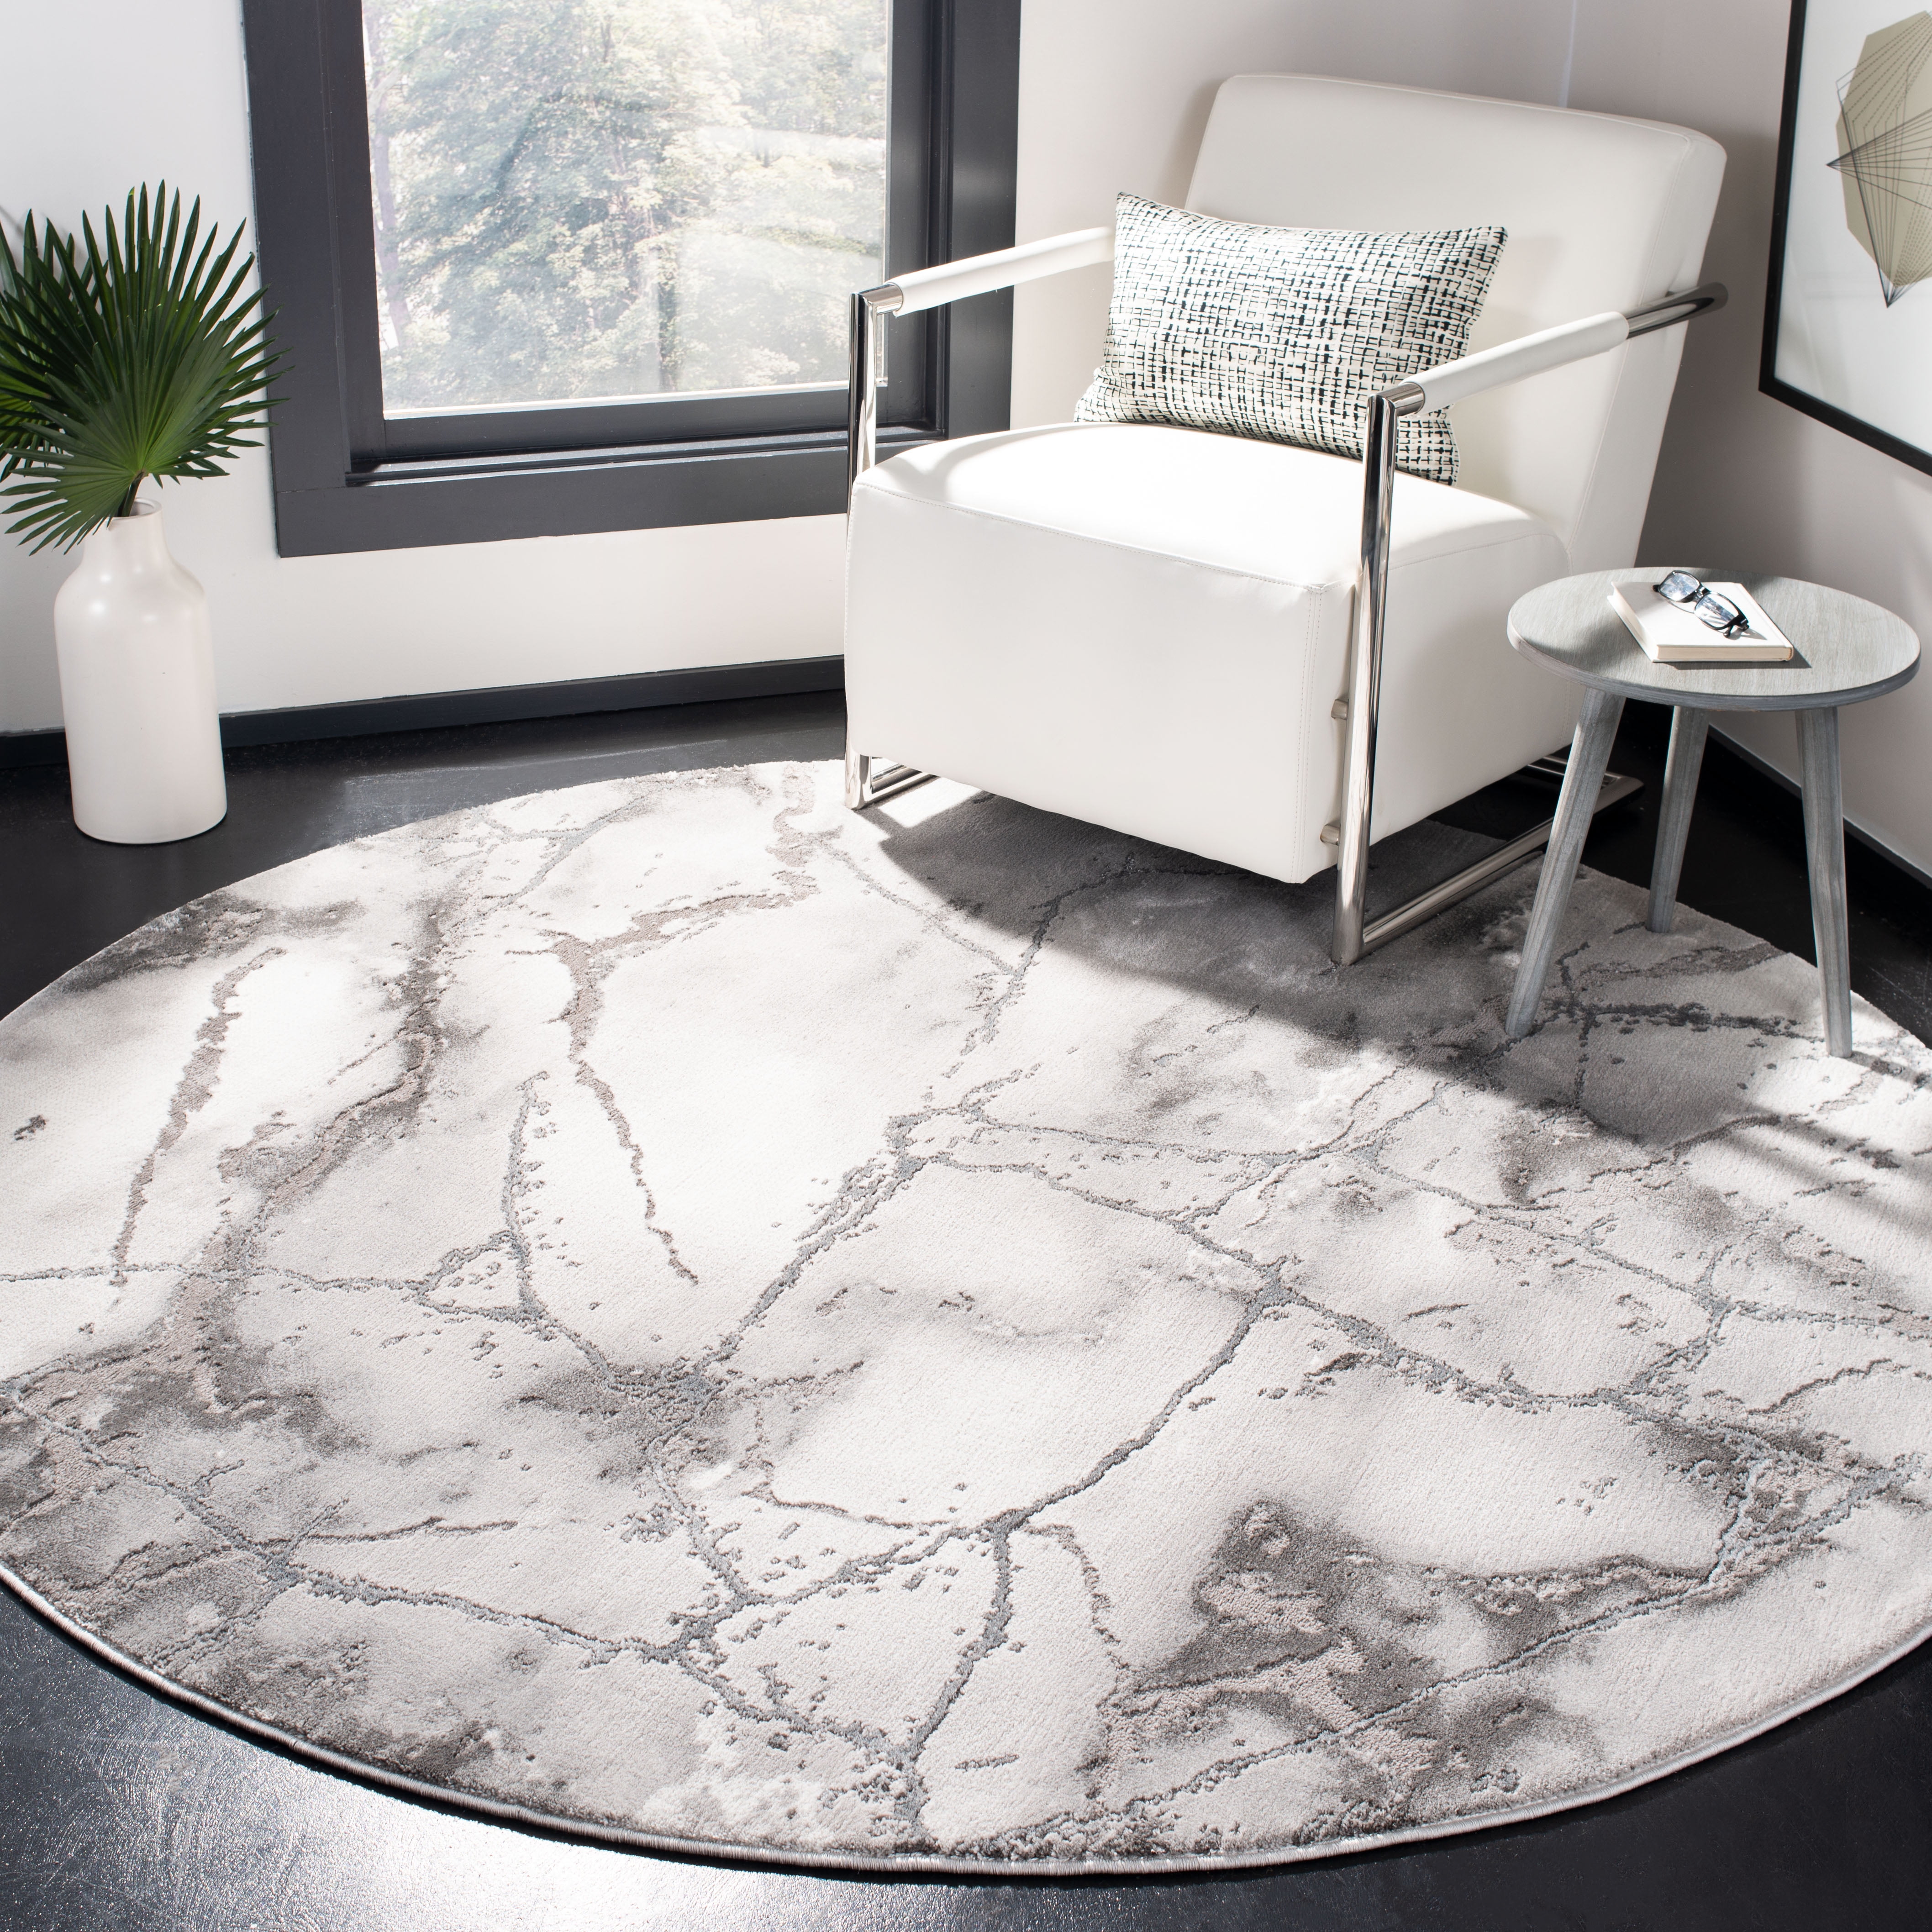 Floor Rug Mat White & Gray Marble Style Bedroom Carpet Living Room Area Rugs NEW 